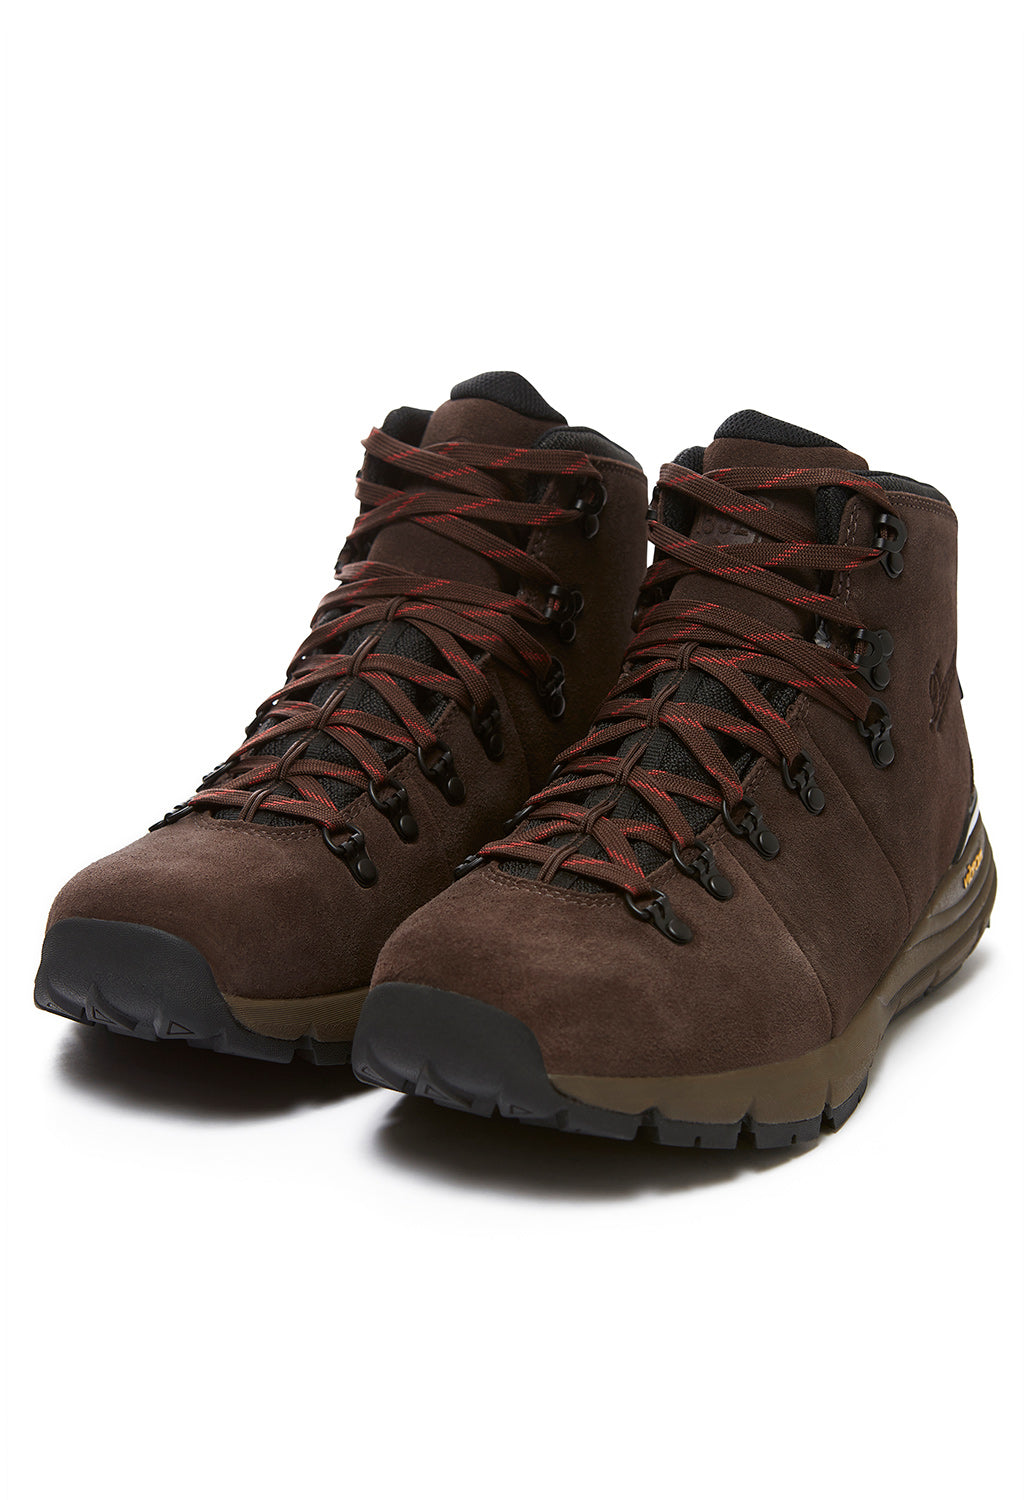 Danner Men's Mountain 600 Boots - Java / Bossa Nova